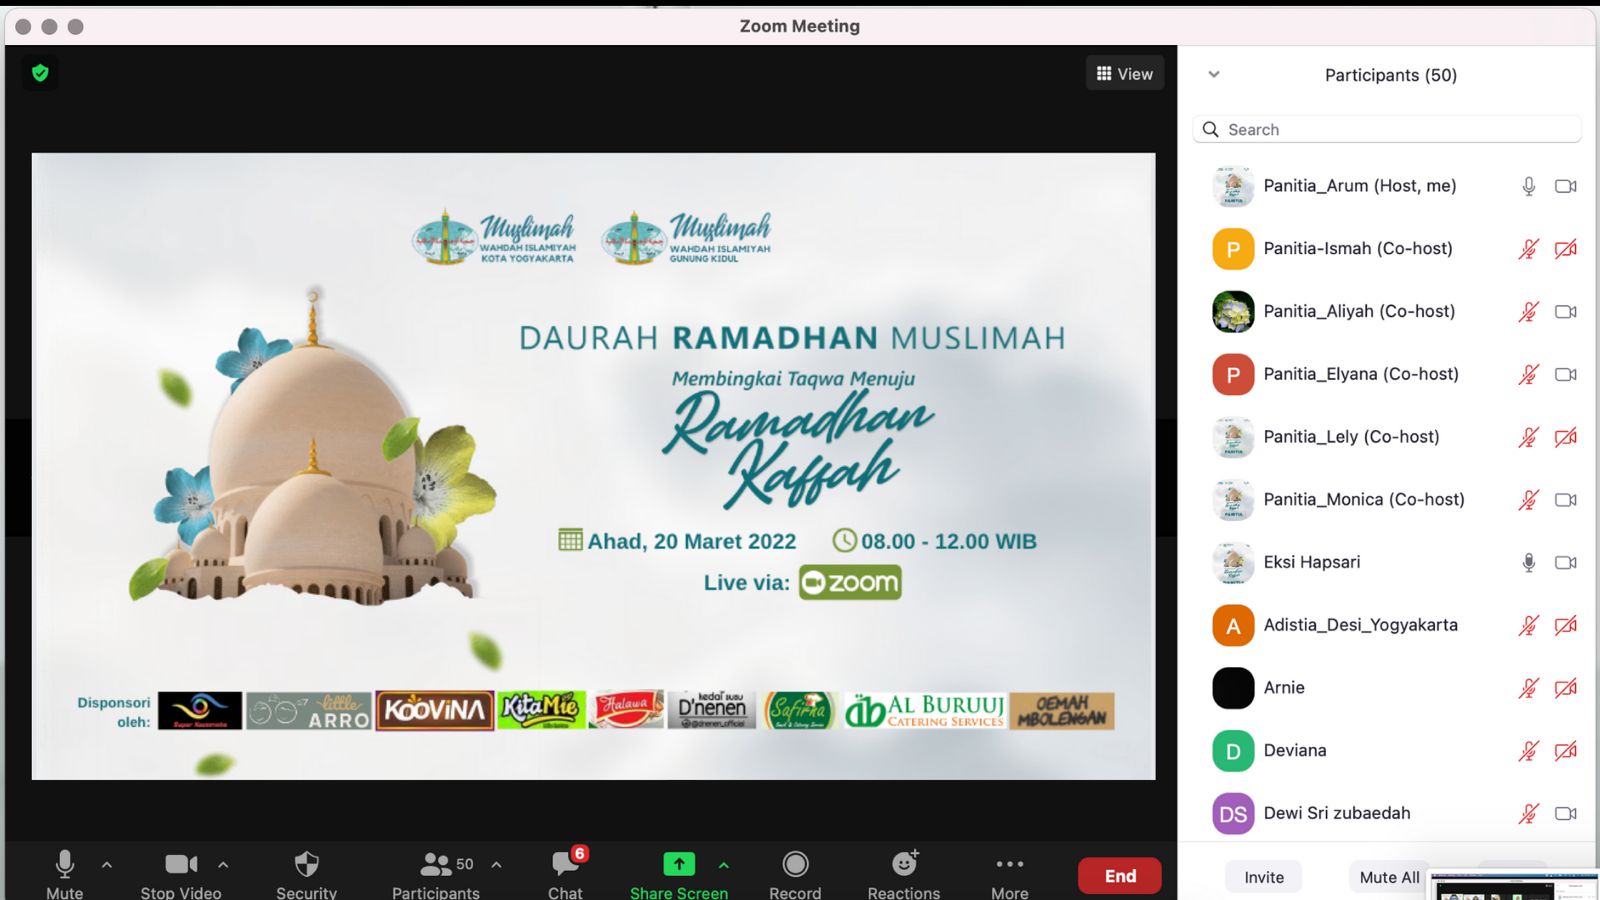 Sambut Ramadhan, Kota Yogyakarta dan Gunung Kidul Sukses Gelar Daurah Muslimah Wahdah